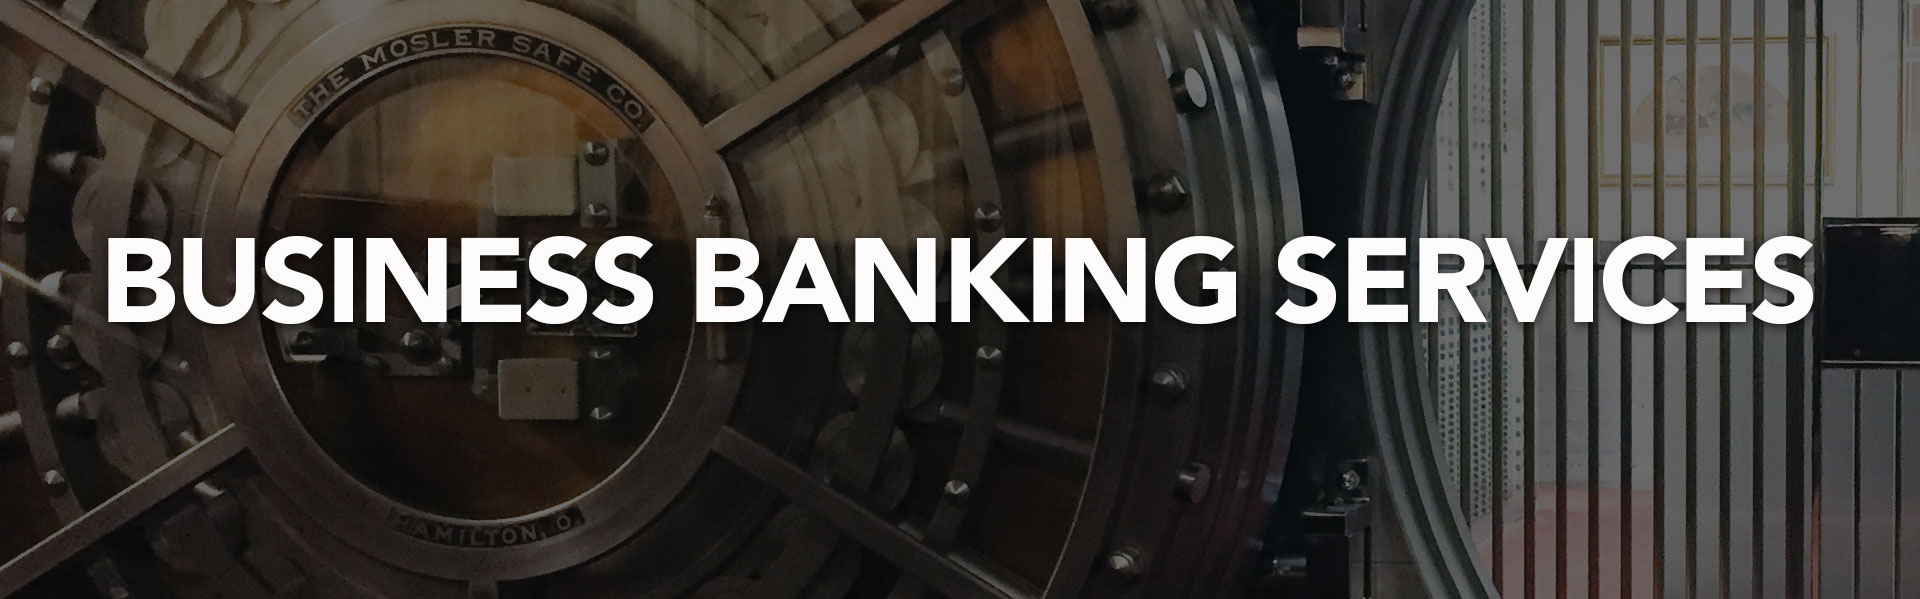 ibc banking online phone